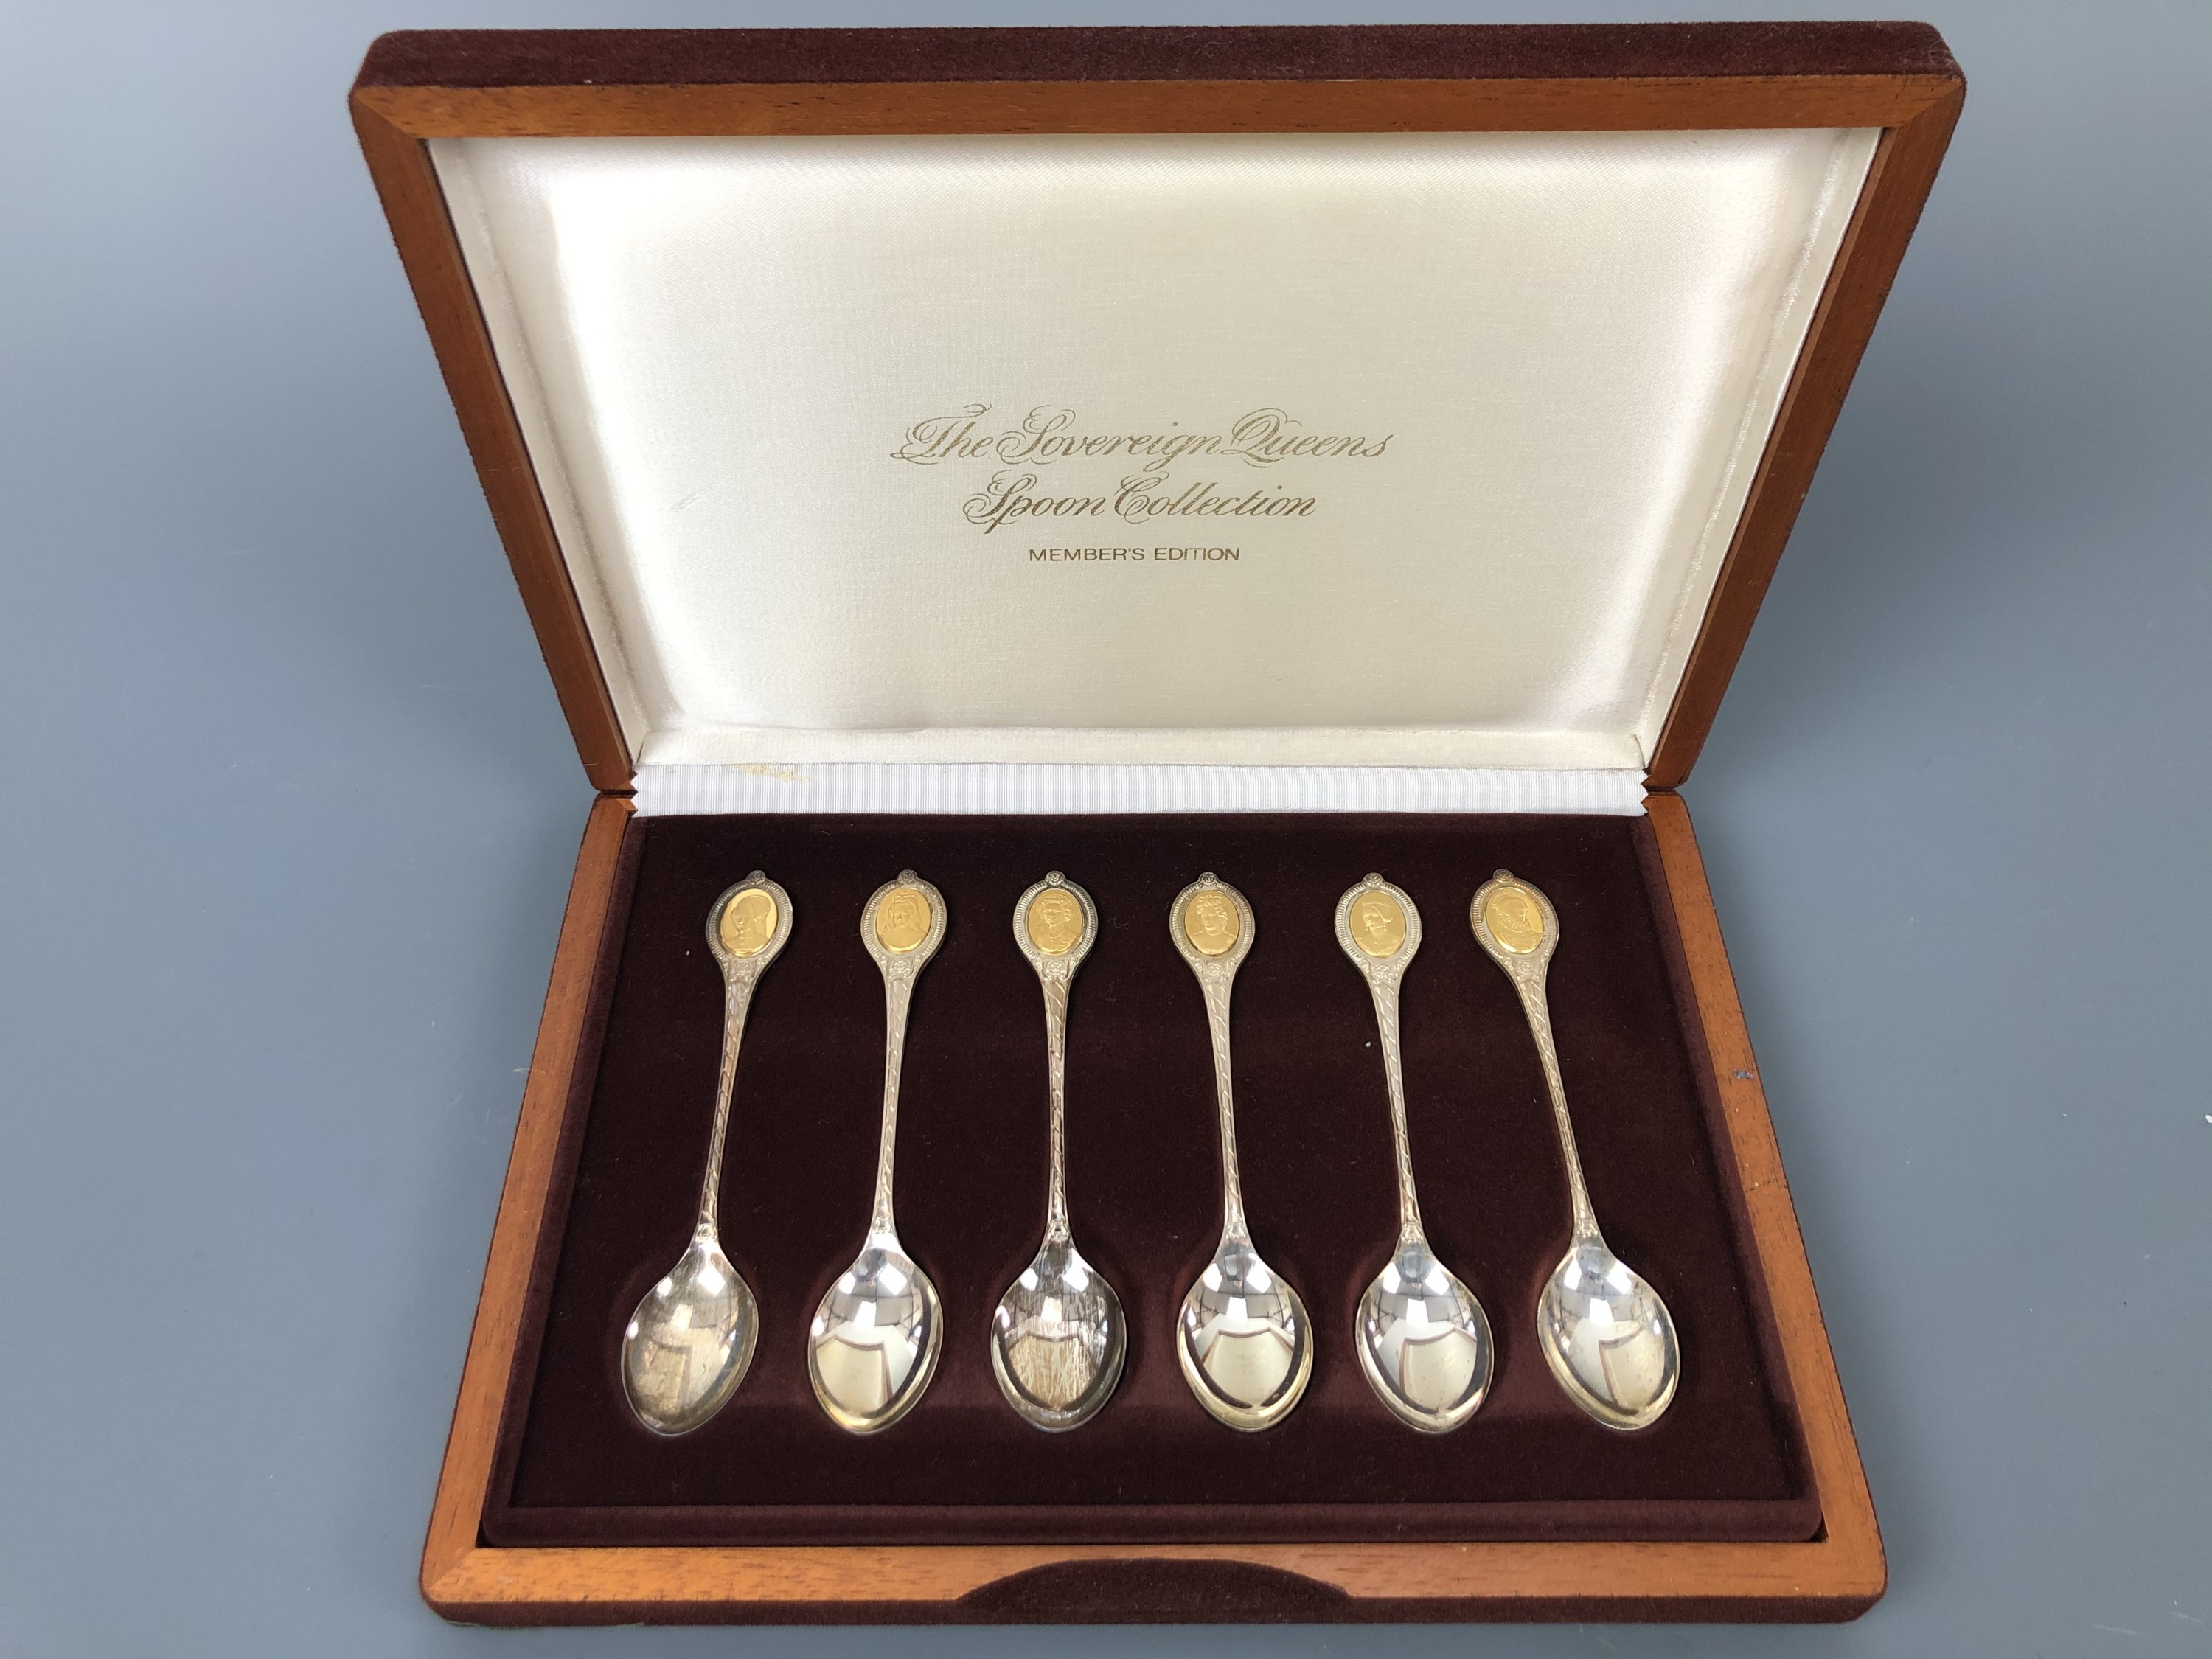 A John Pinches "The Sovereign Queens" silver spoon collection, 153 g